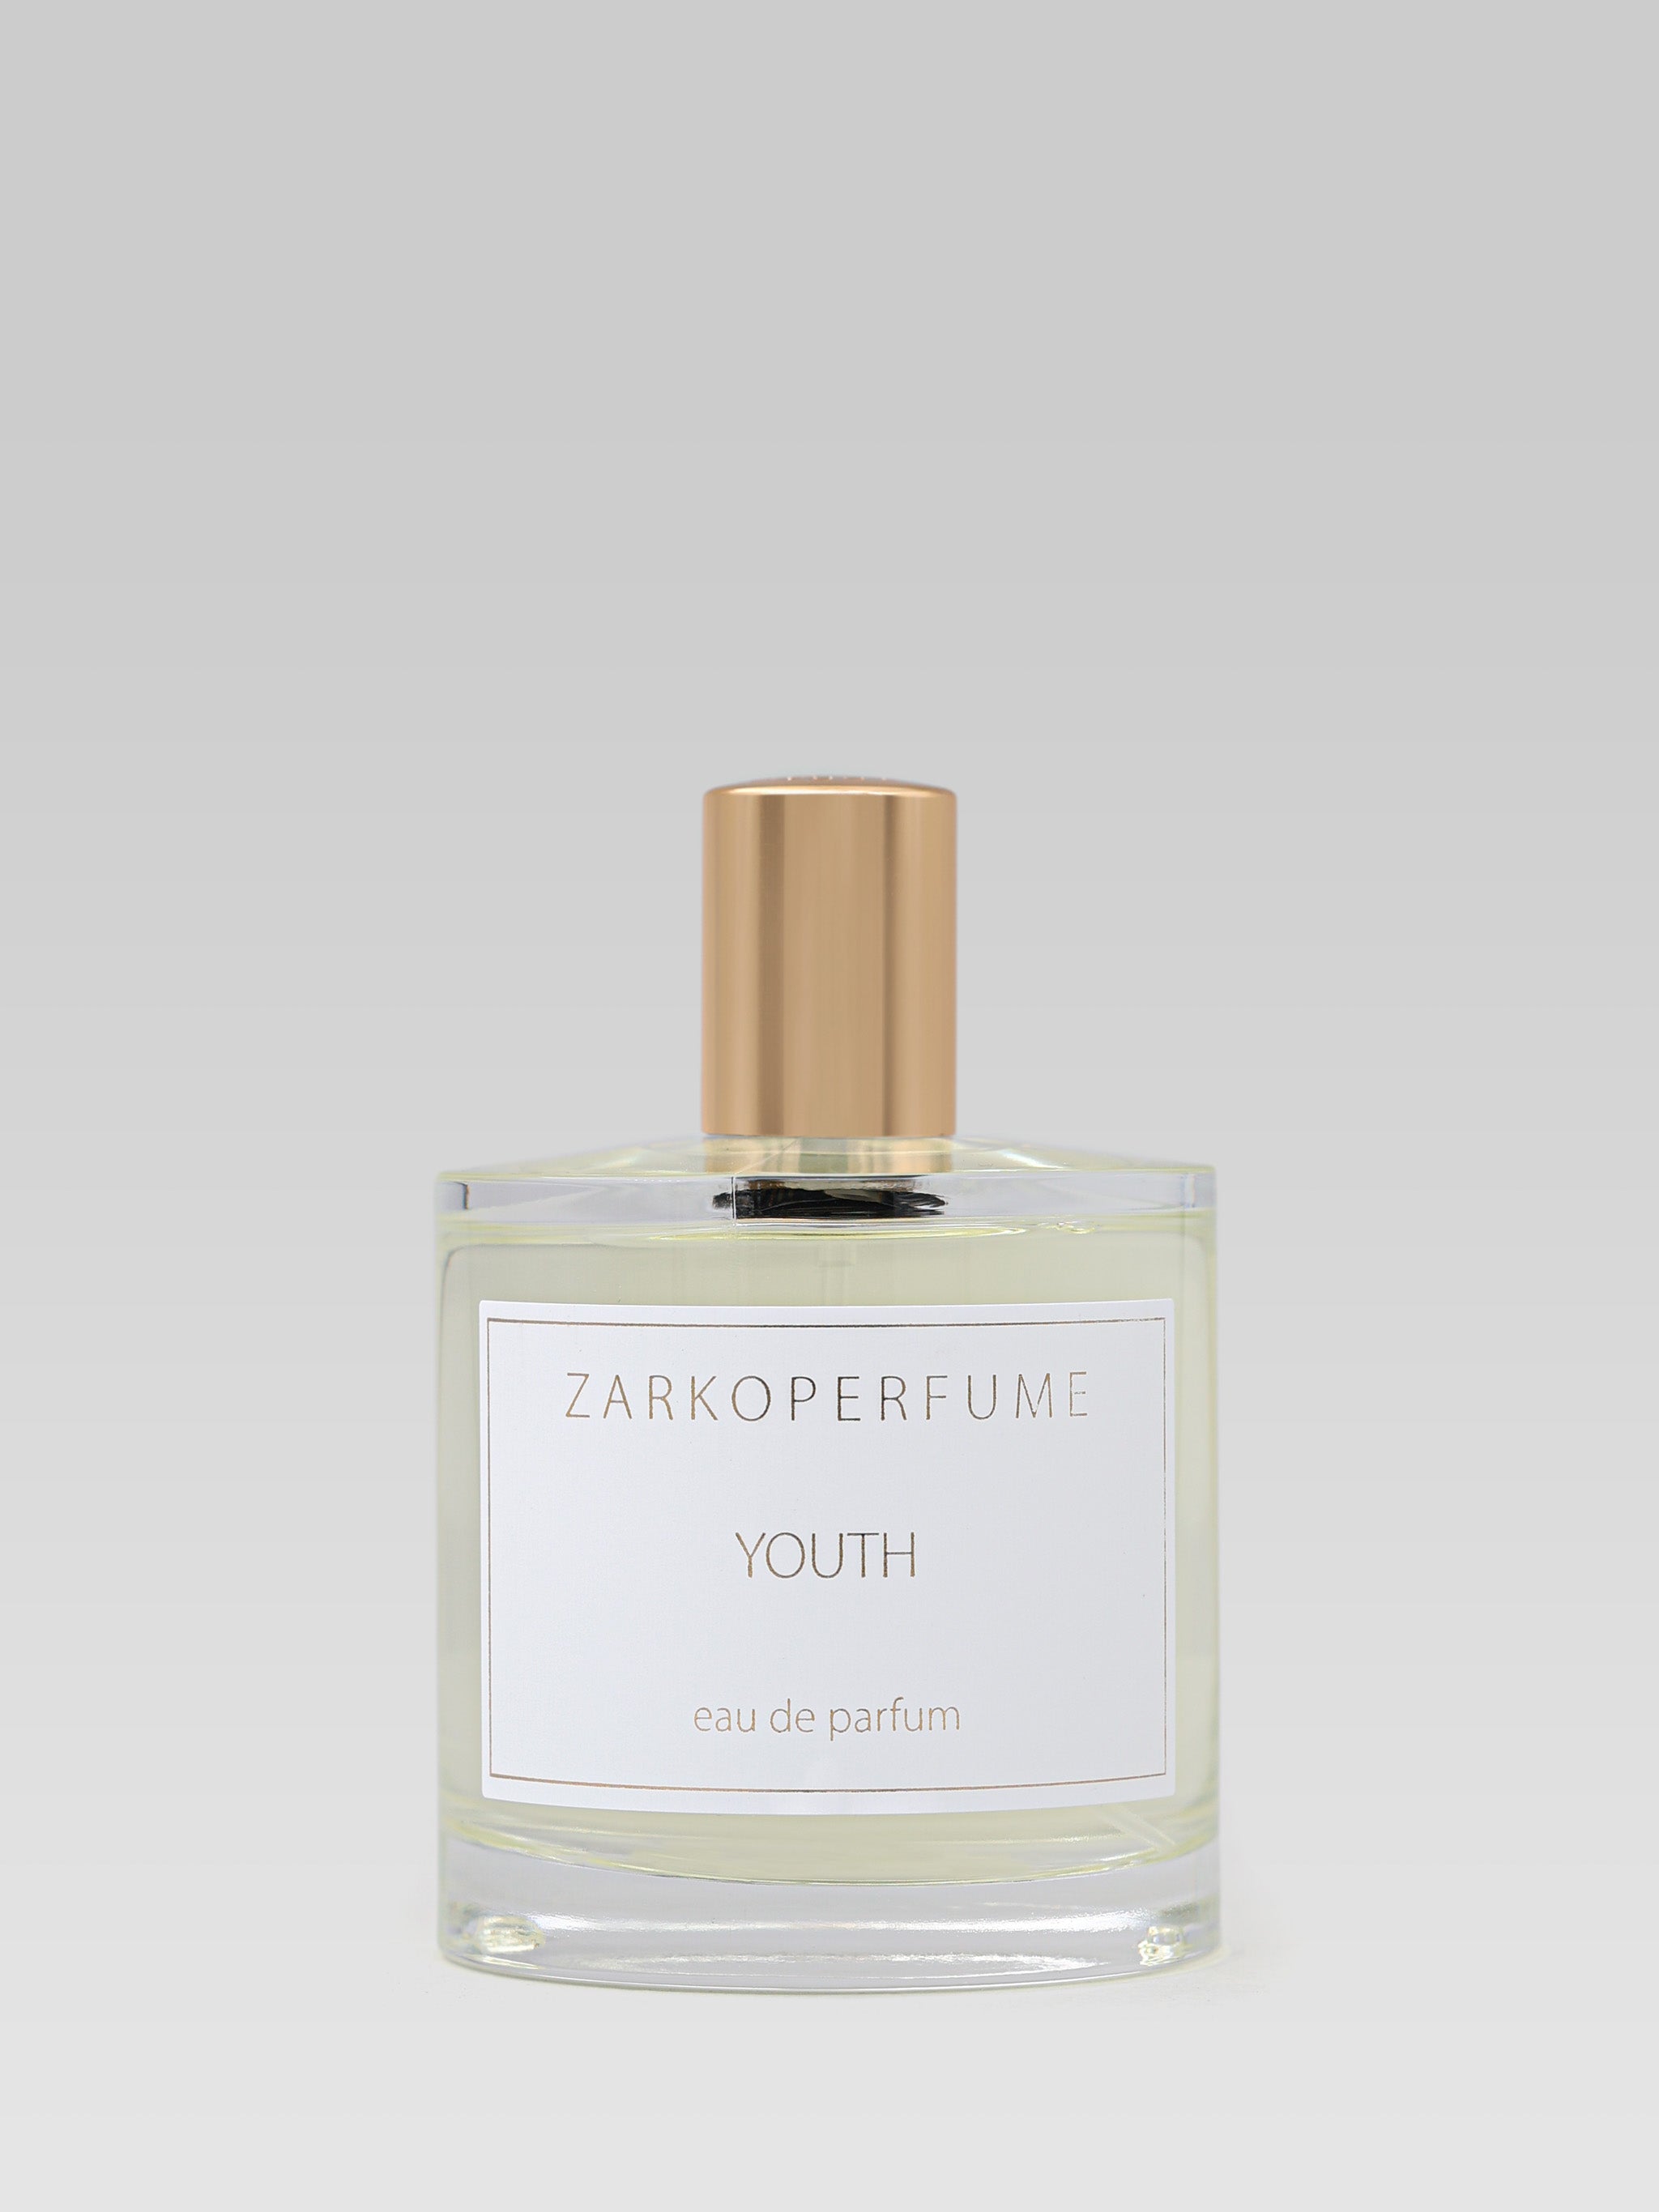 Zarko Parfume Youth product shot 